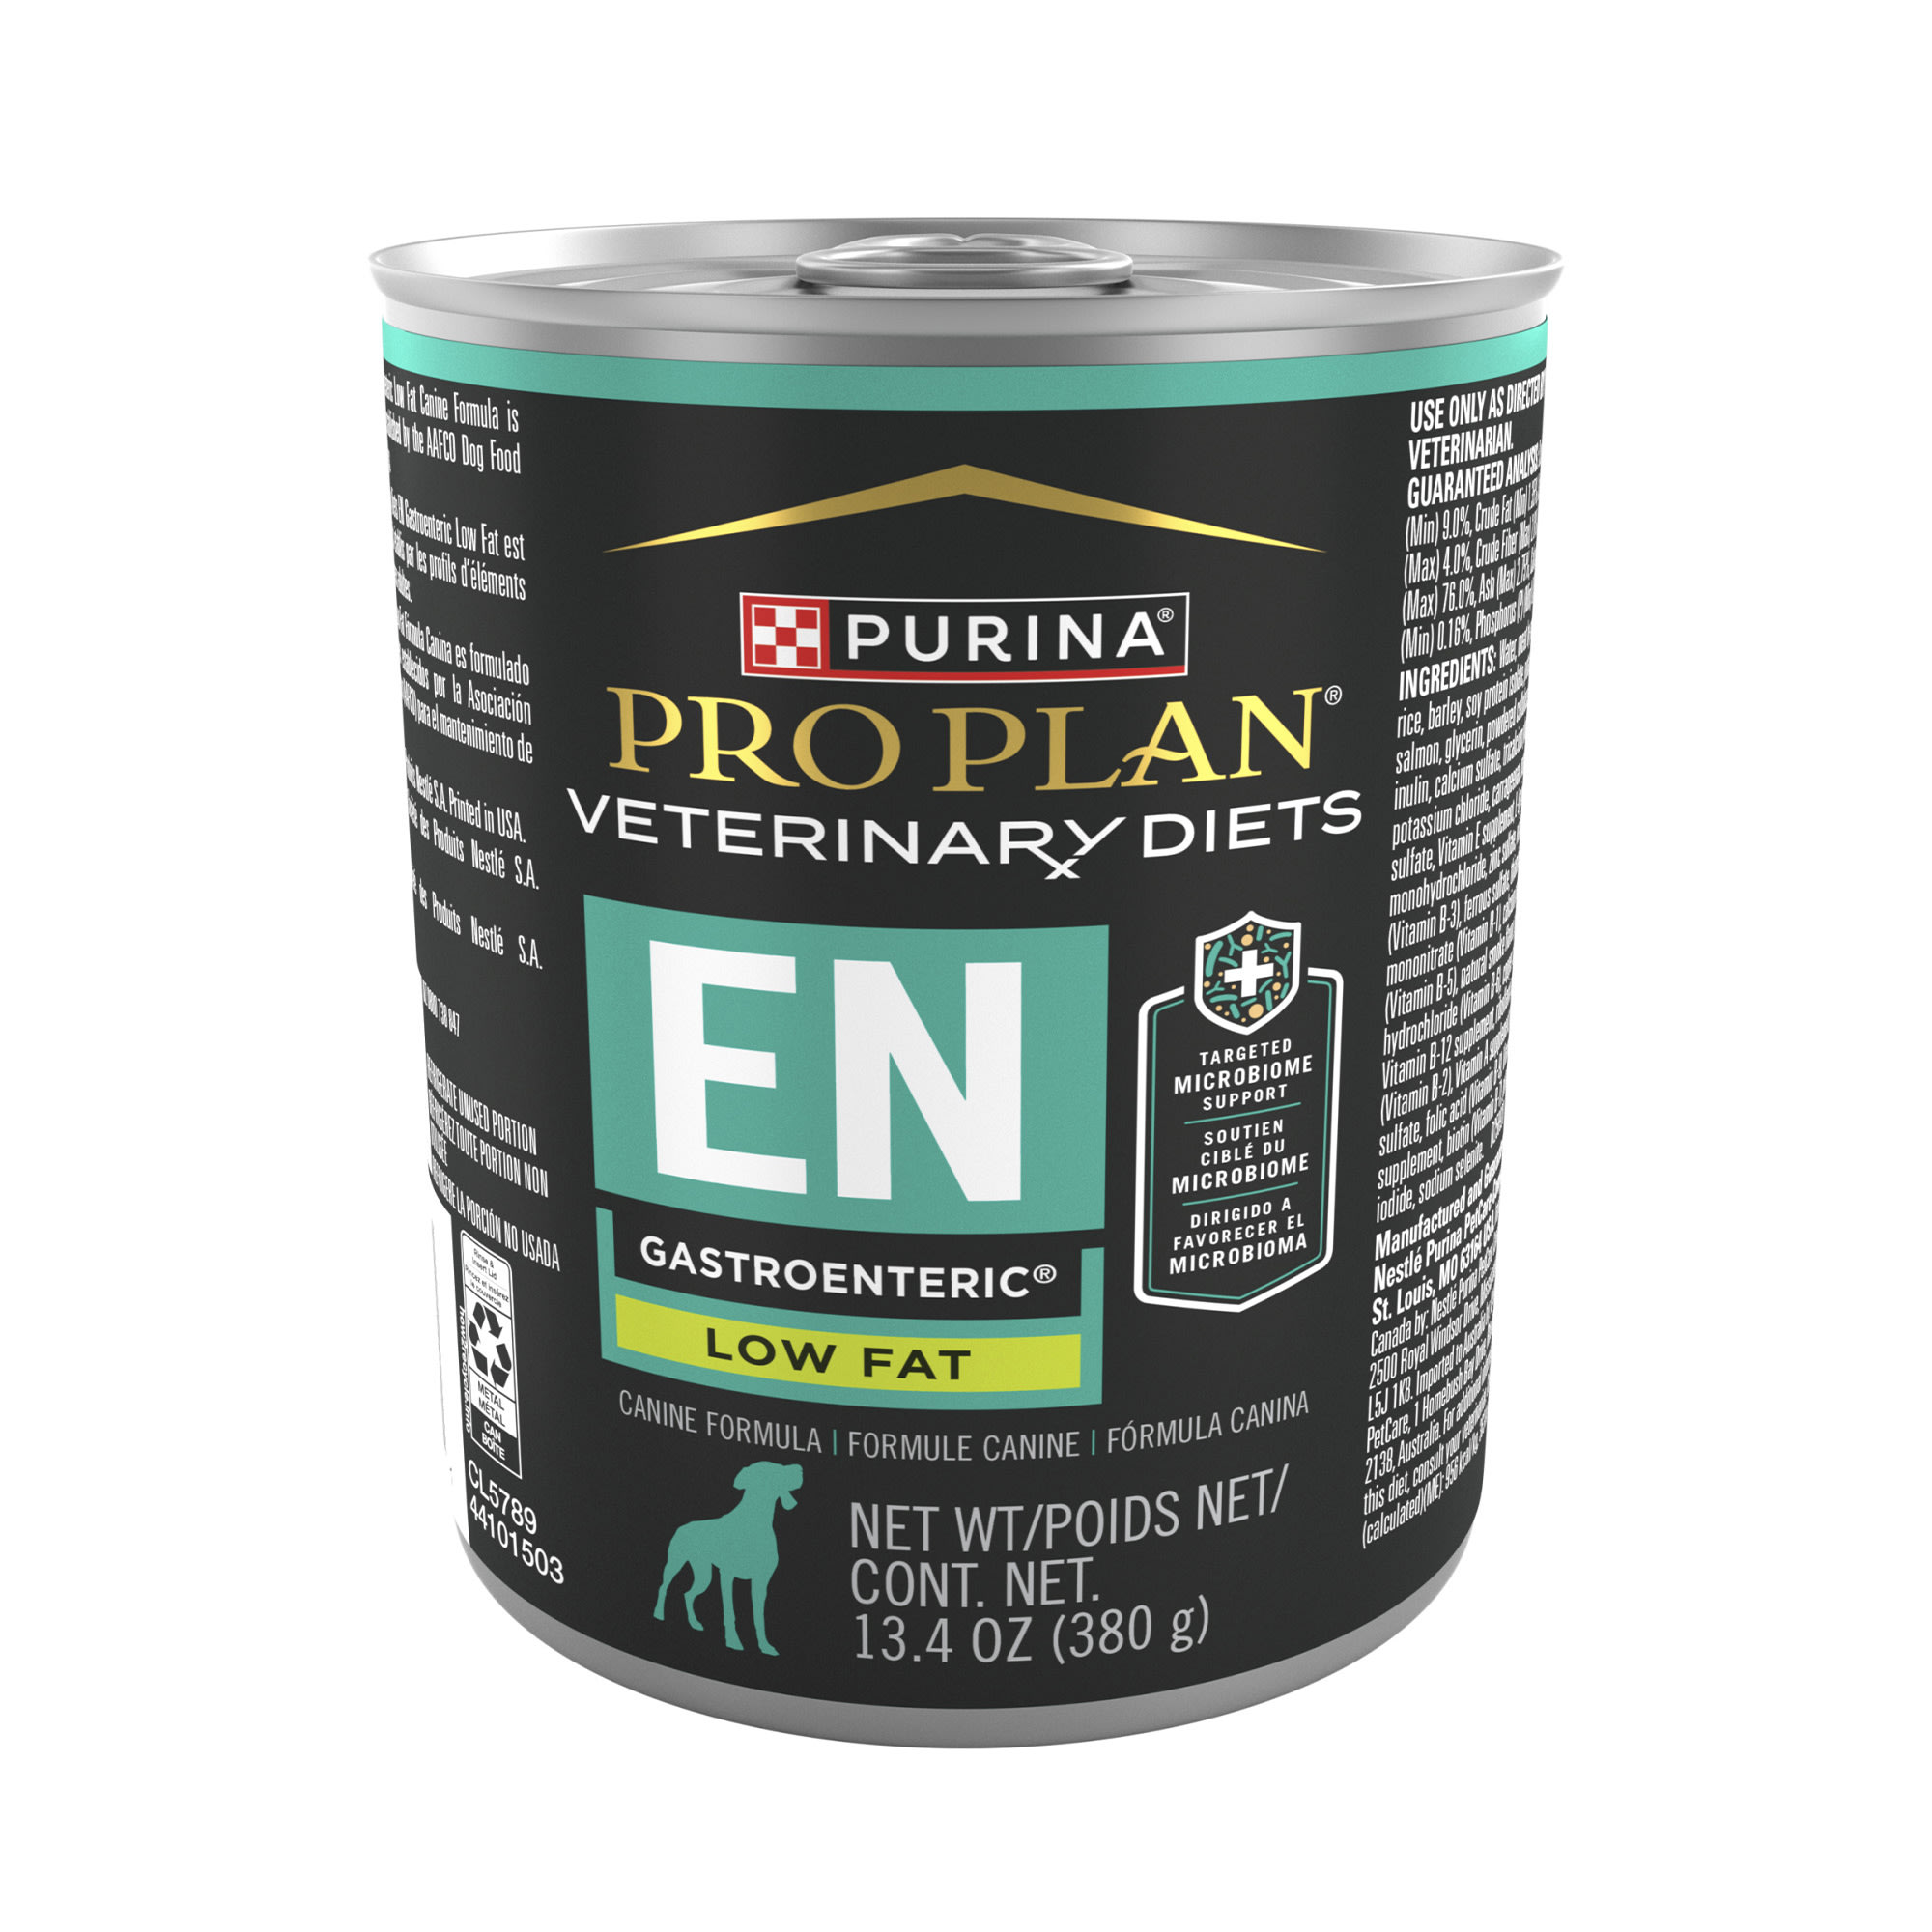 purina-pro-plan-veterinary-diets-en-gastroenteric-low-fat-canine